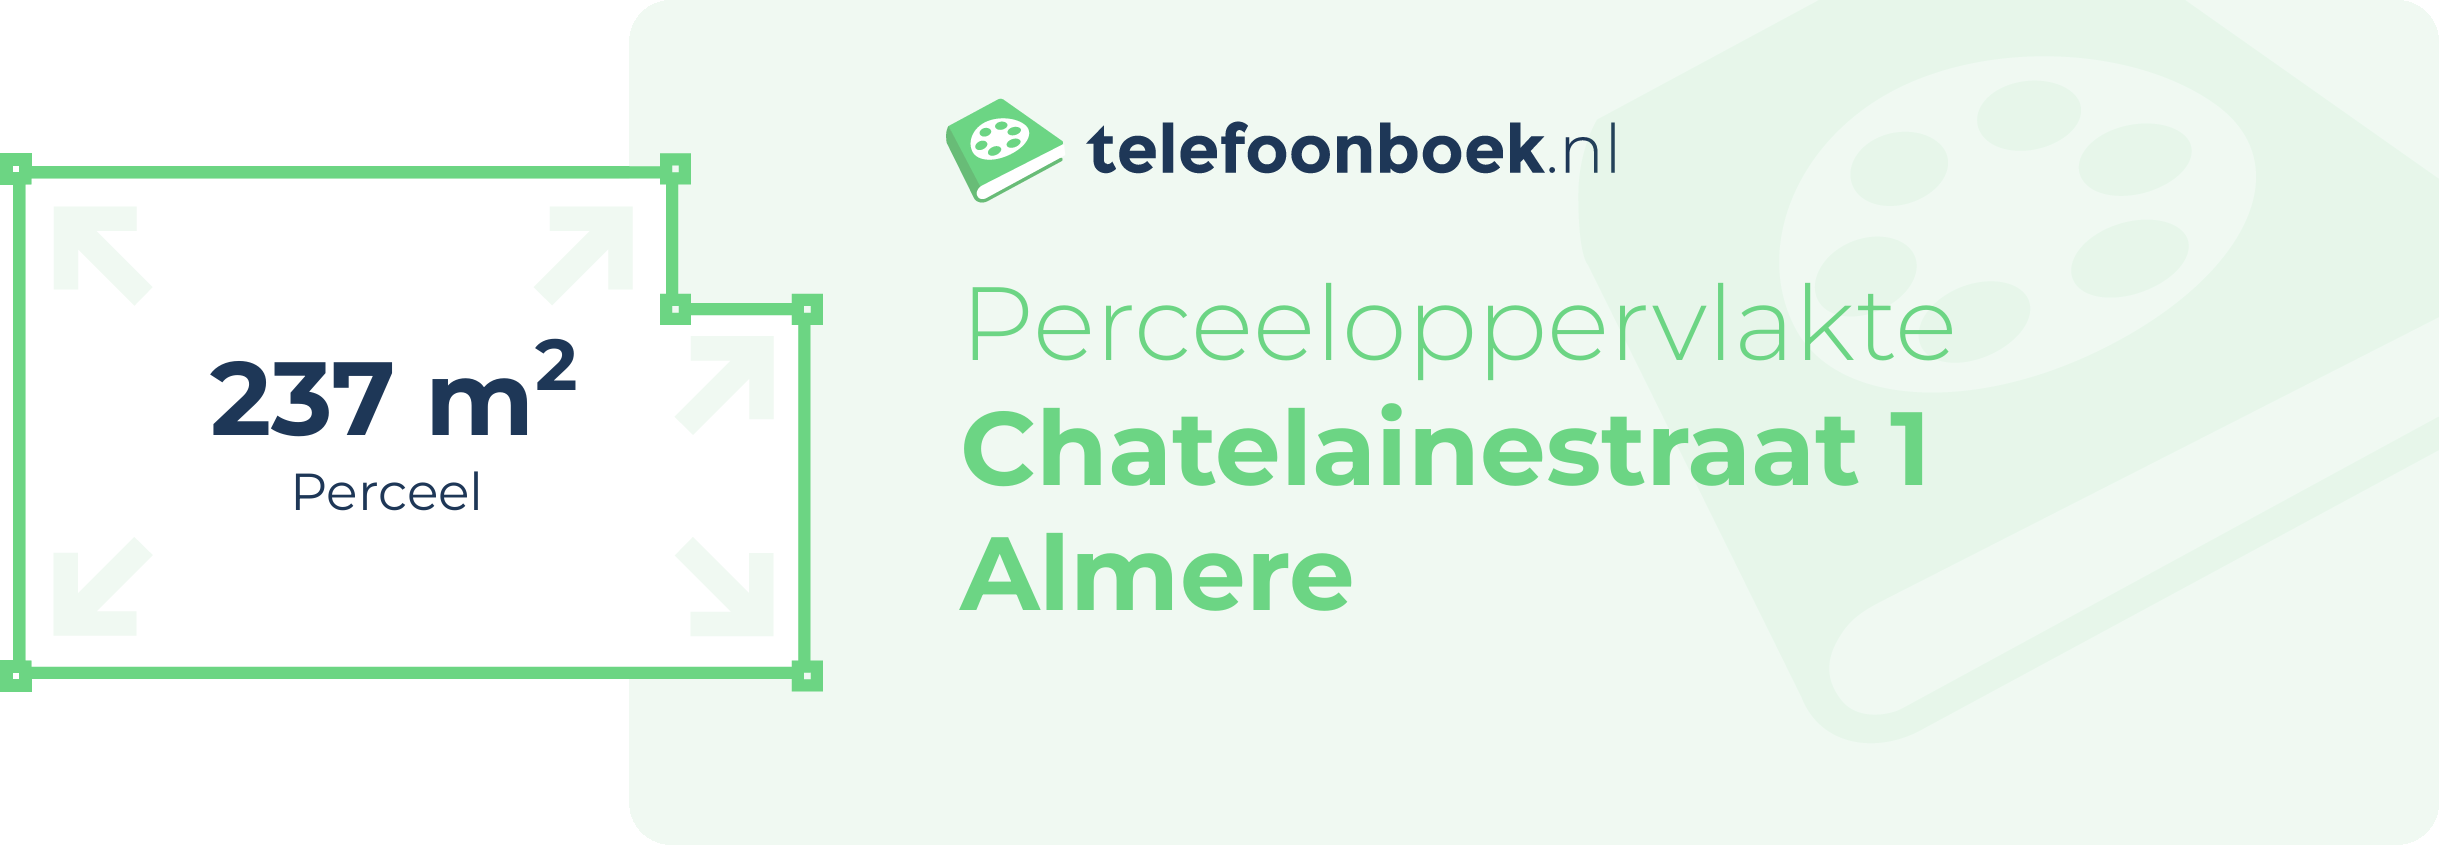 Perceeloppervlakte Chatelainestraat 1 Almere